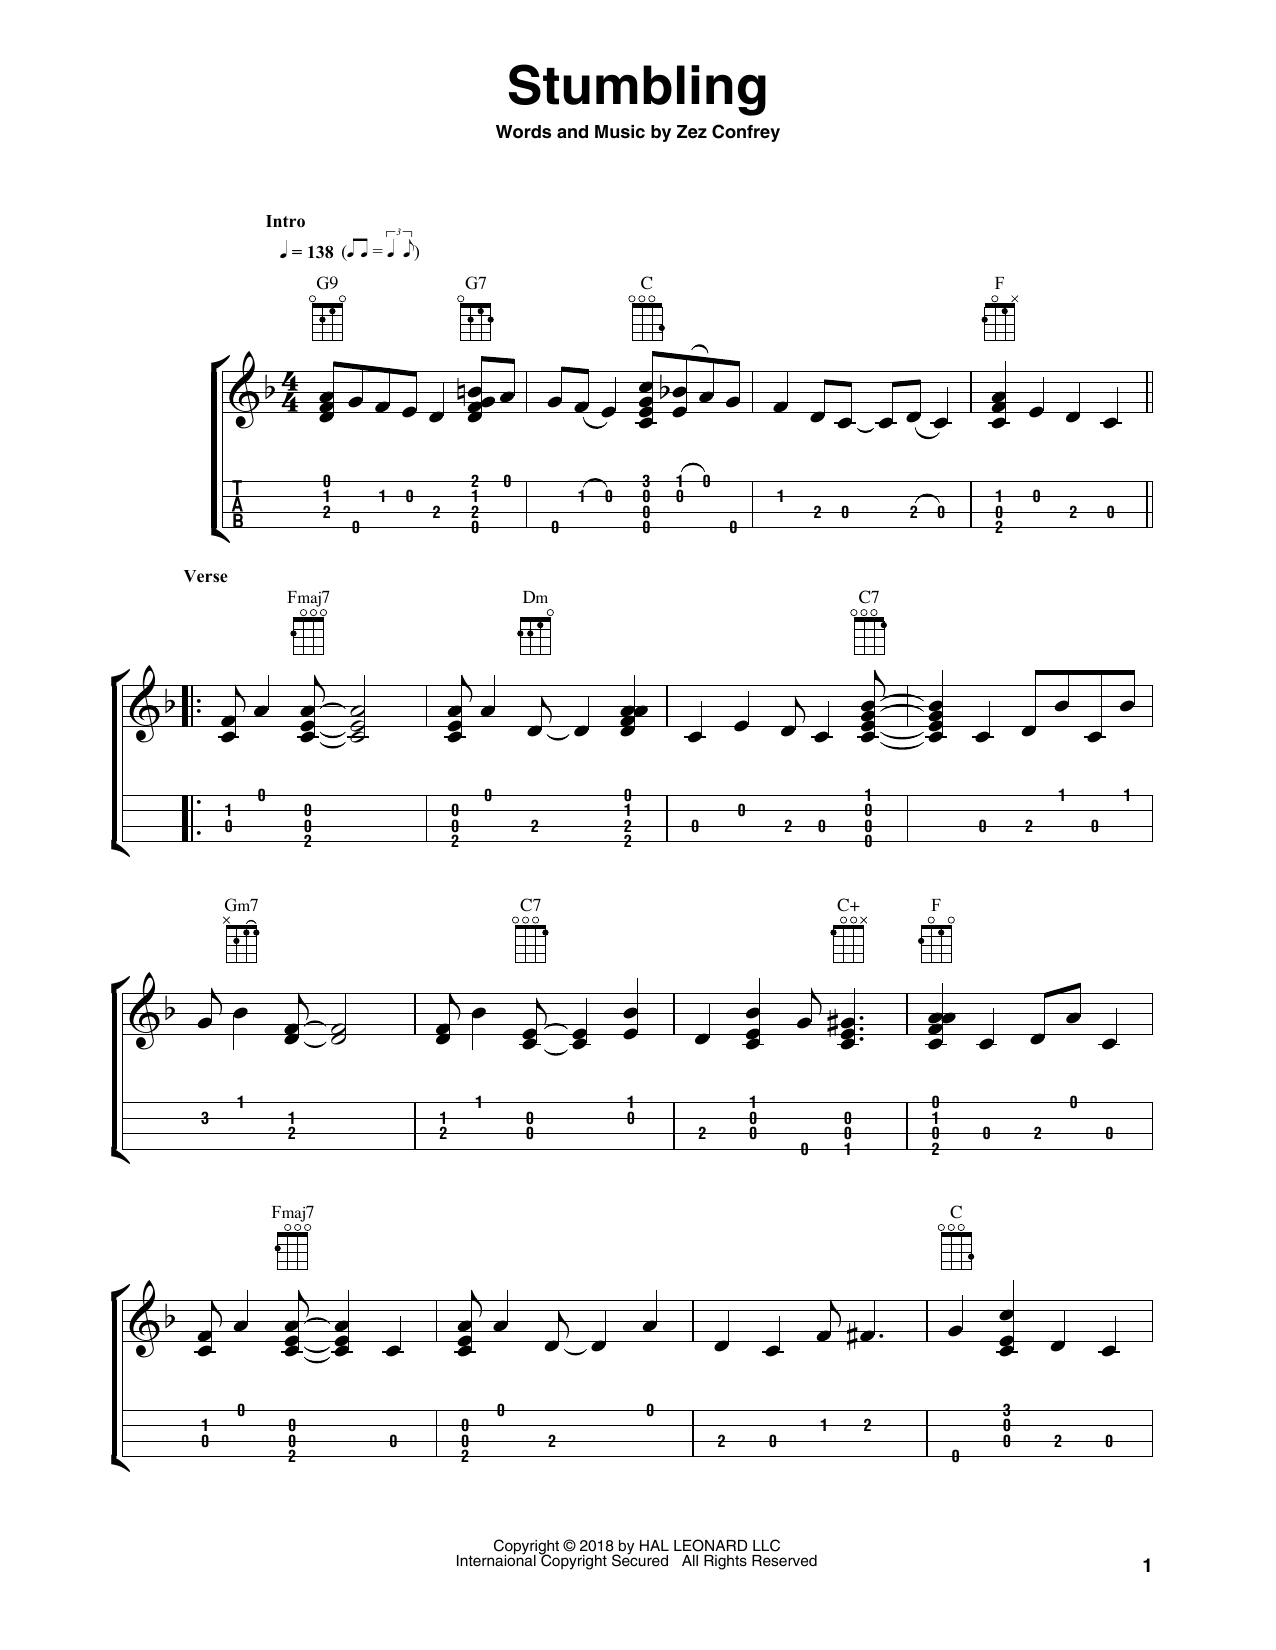 Fred Sokolow Stumbling Sheet Music Notes & Chords for Ukulele - Download or Print PDF